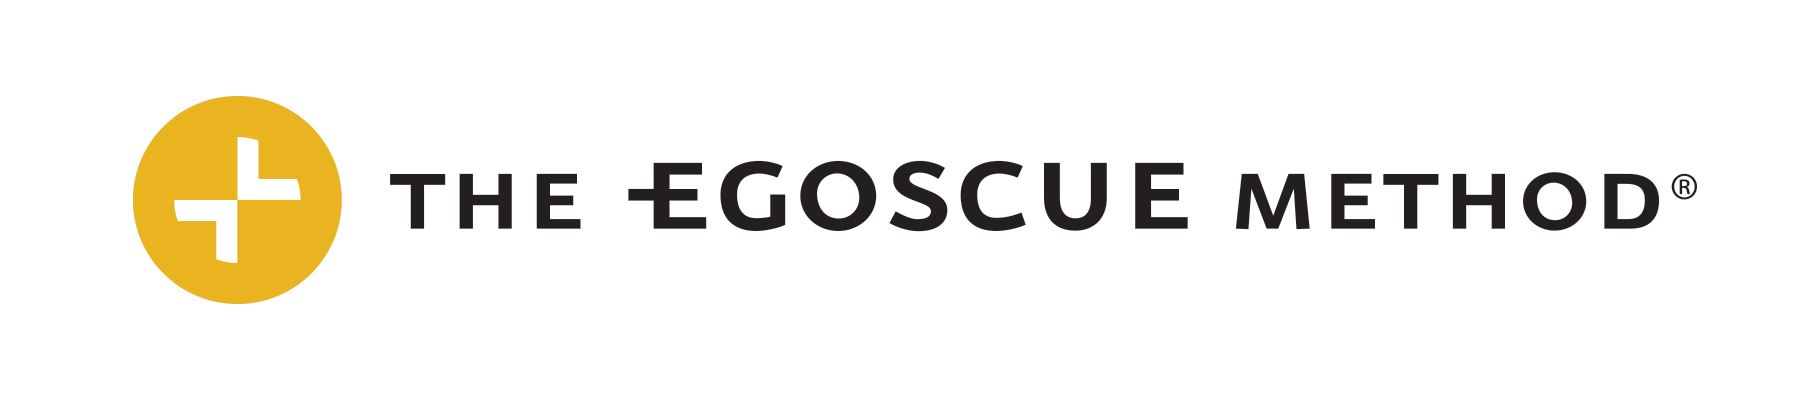 Egoscue-logo-linear-color-1800x400 (003)